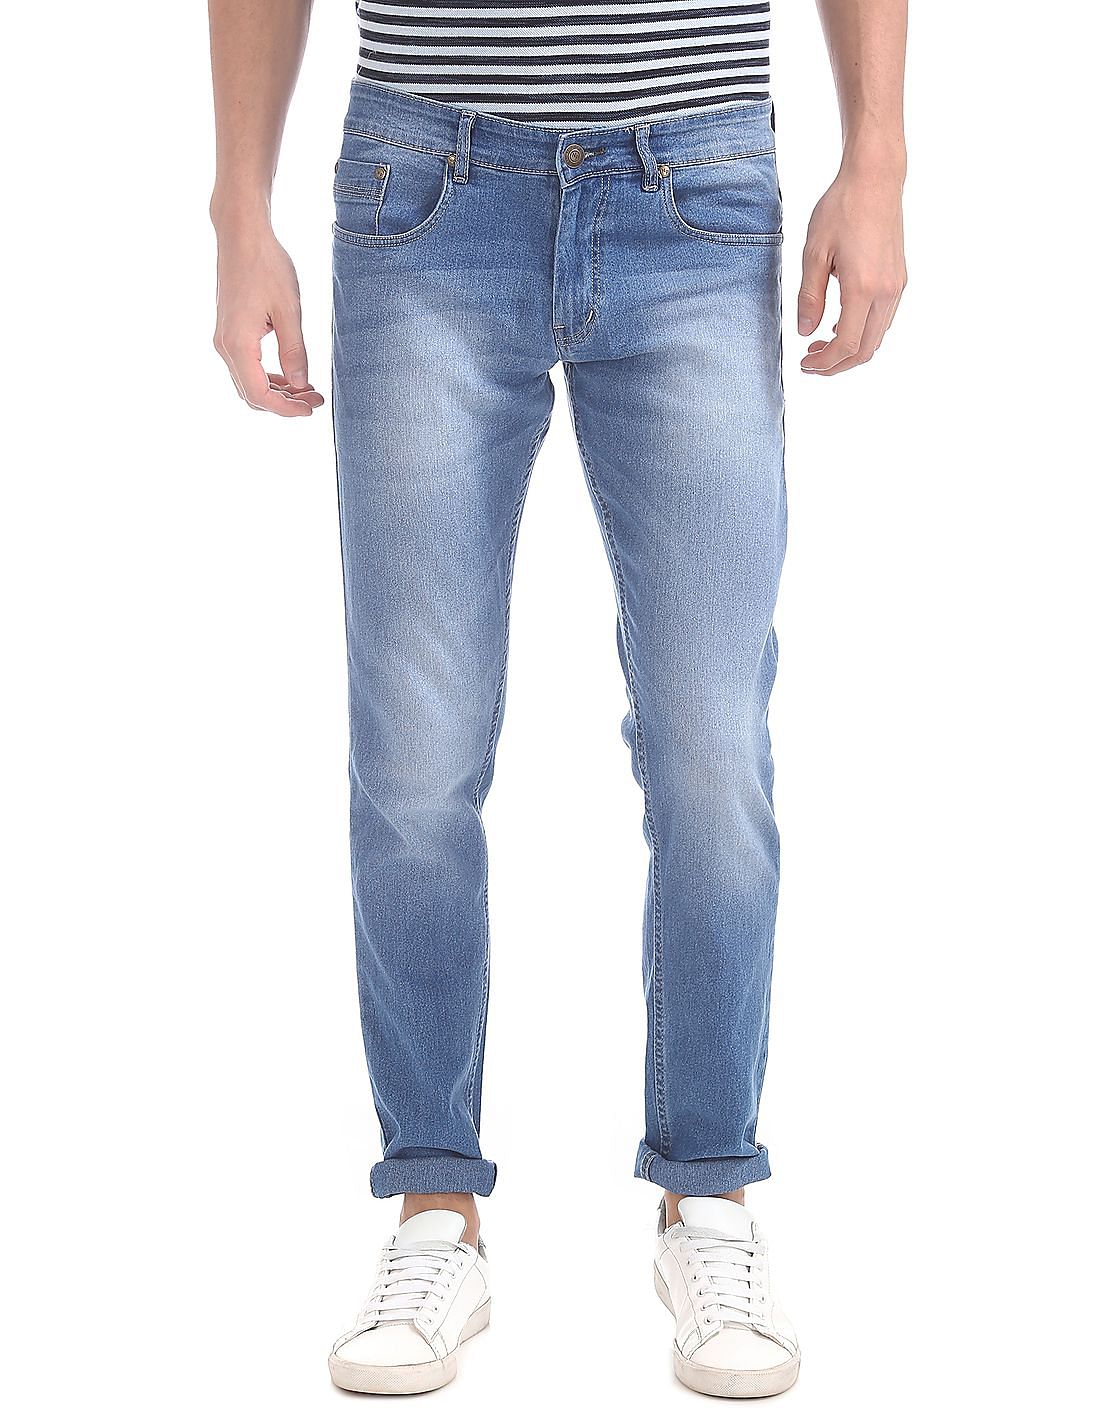 Buy Men Low Rise Slim Fit Jeans online at NNNOW.com